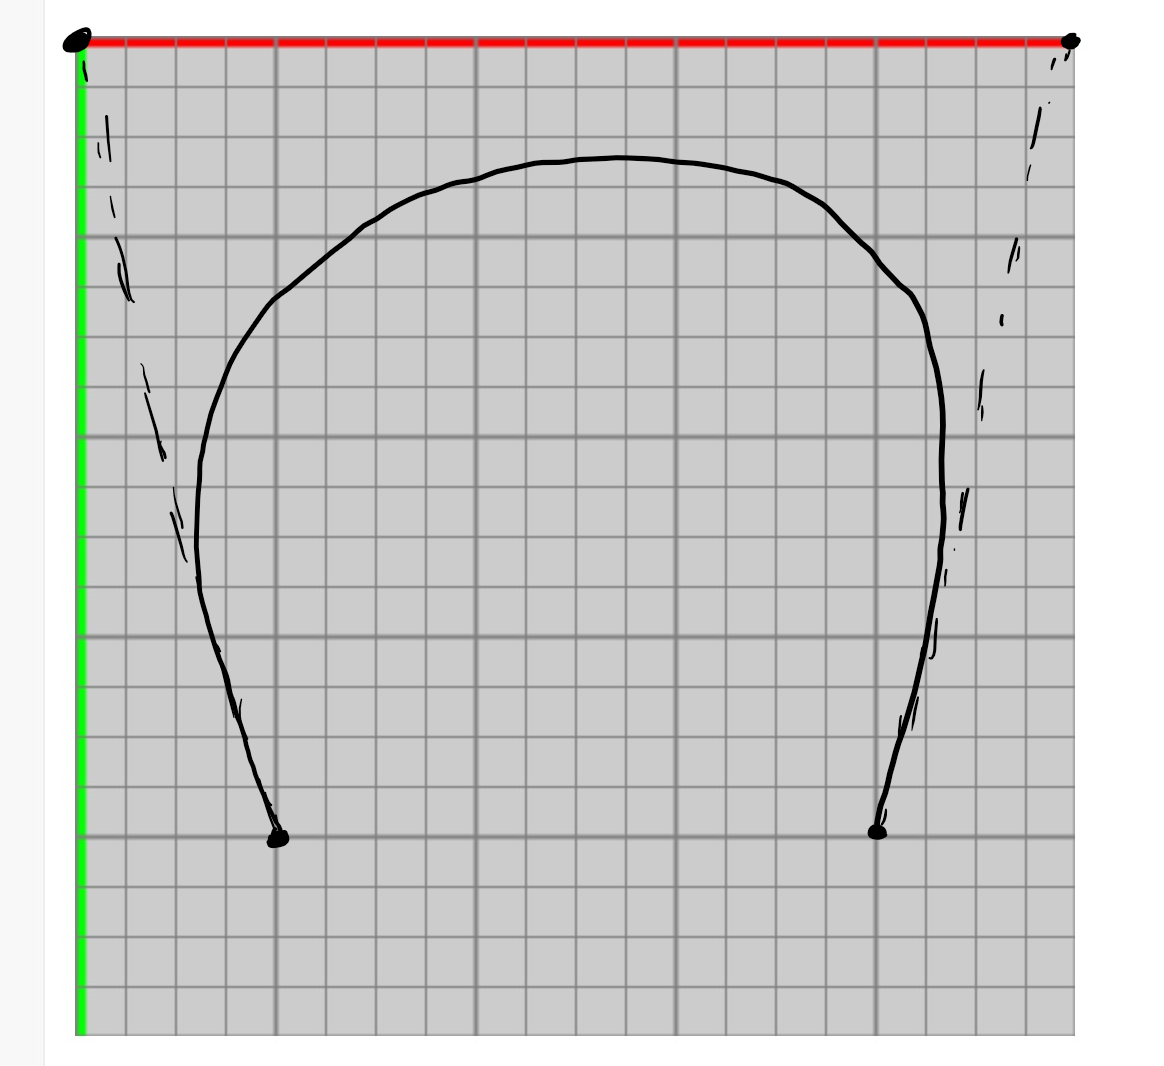 Q1 curve